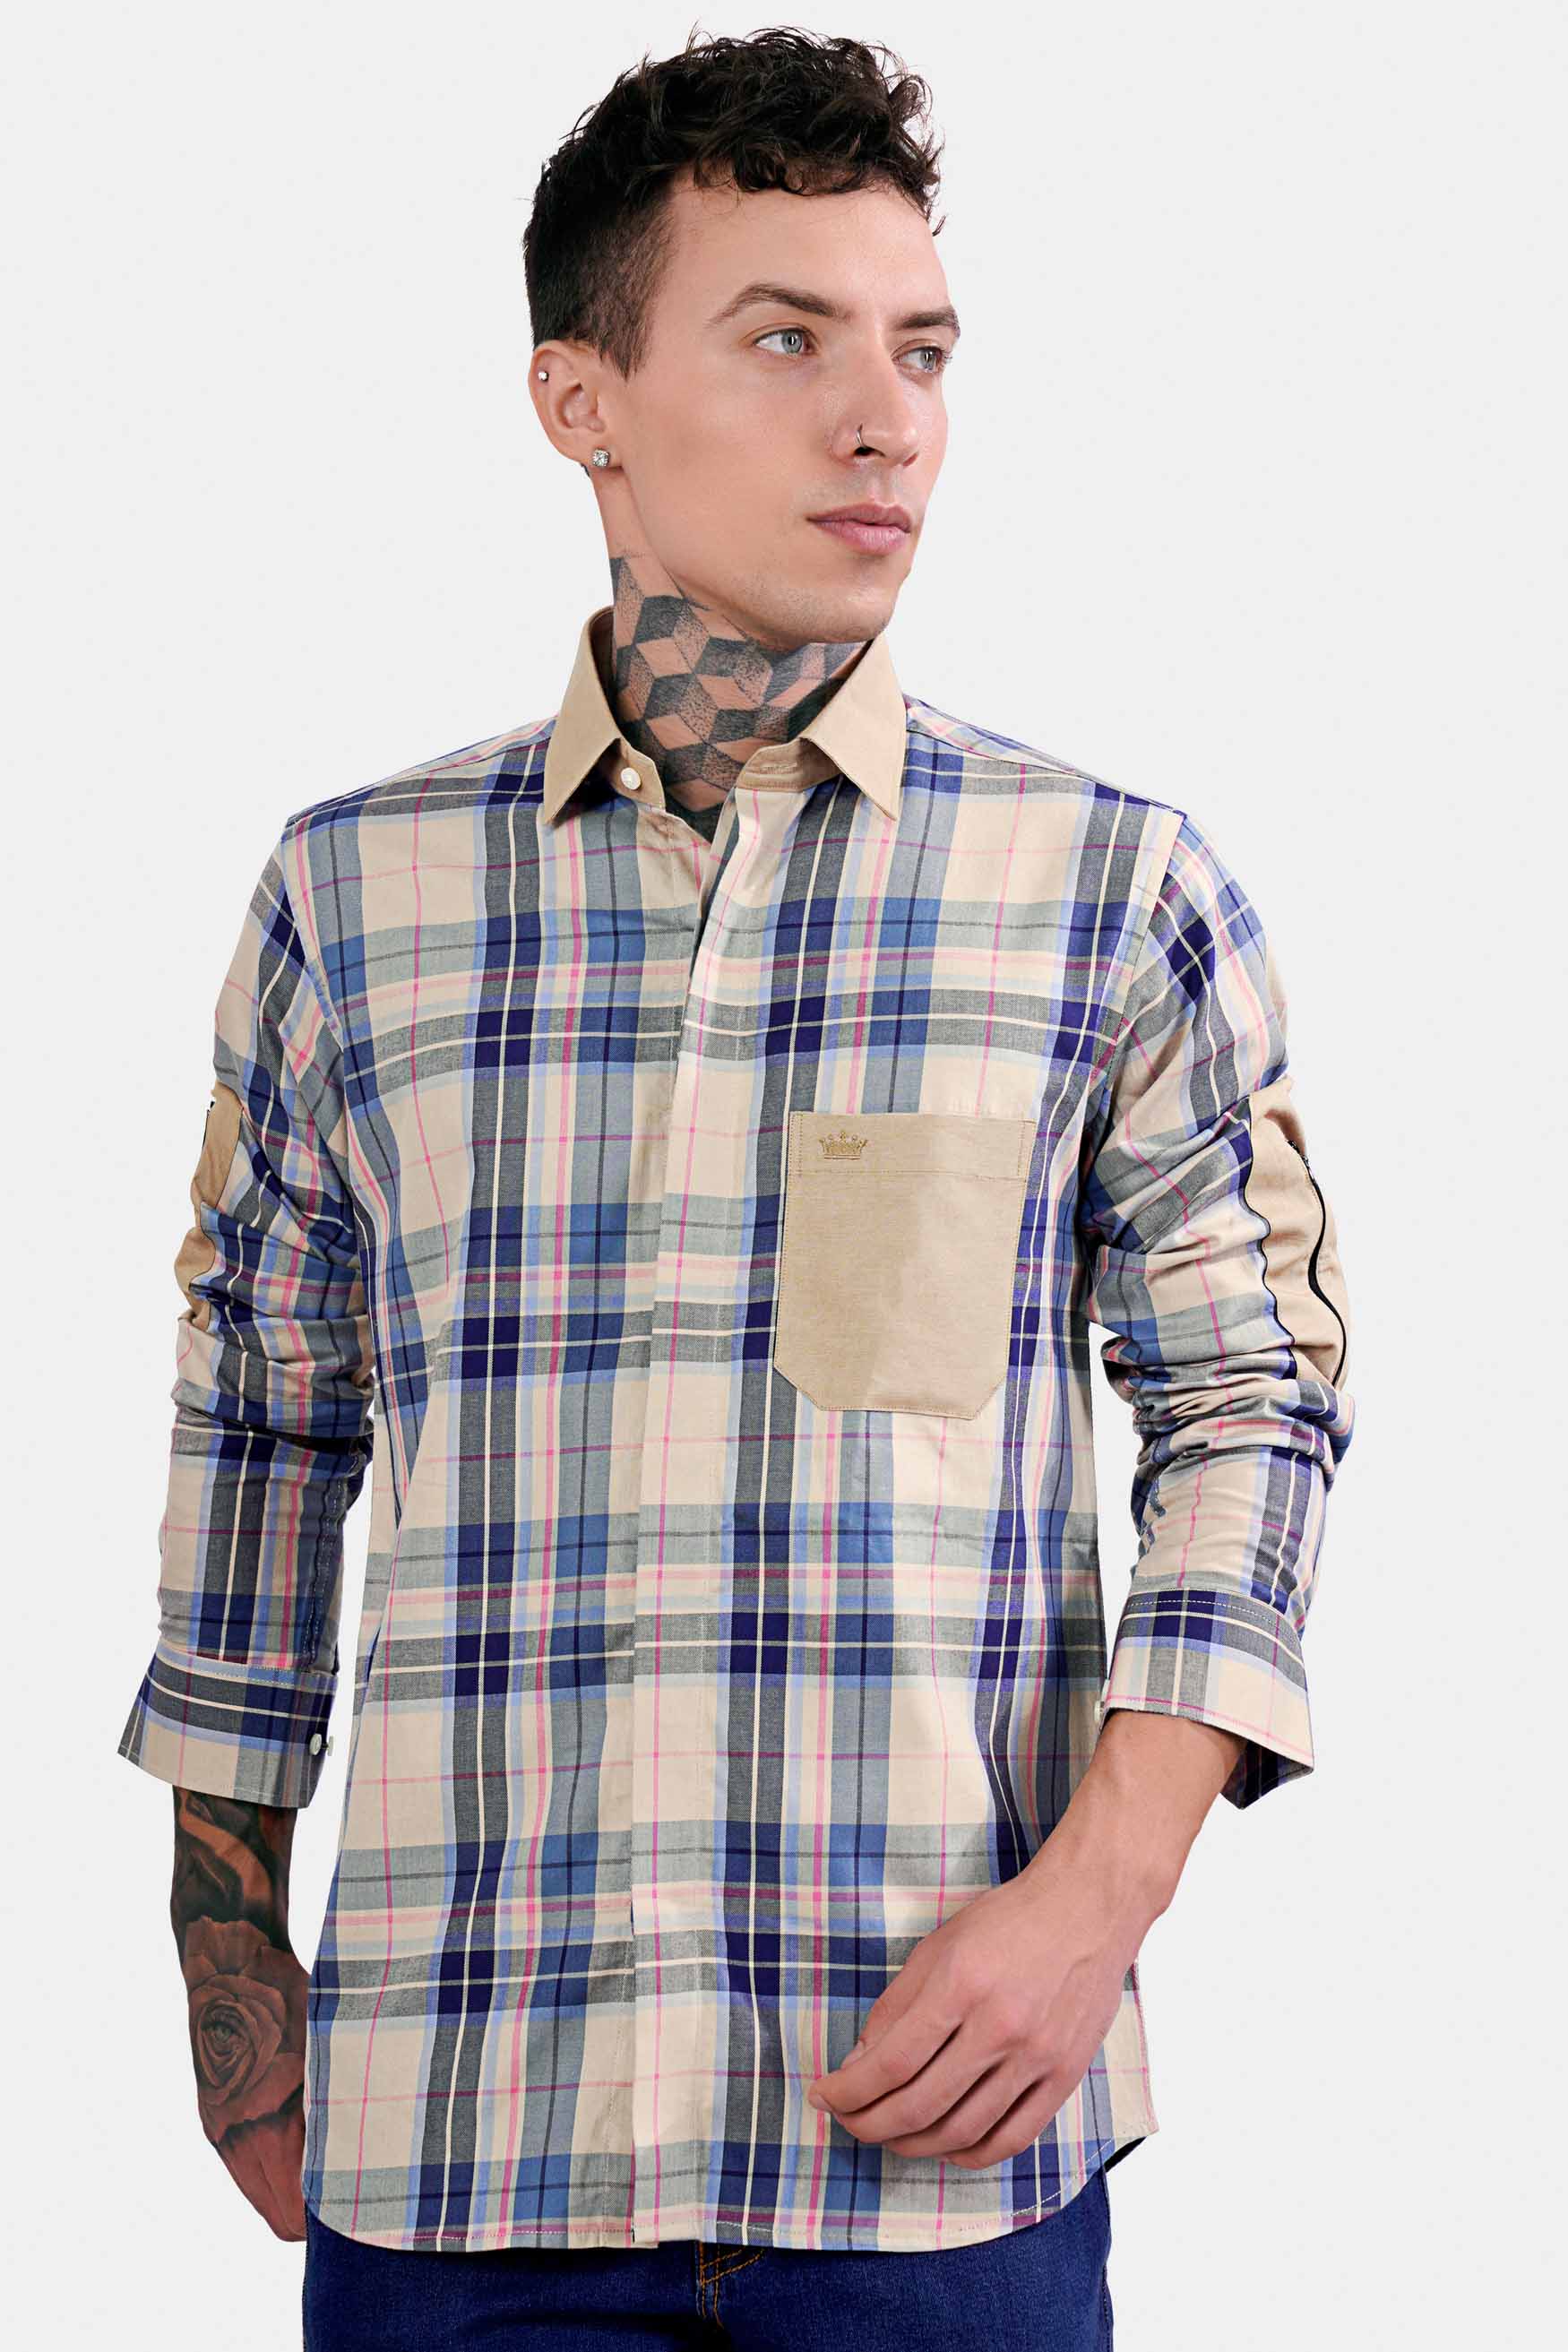 Shell Brown and Lapis Blue Twill Plaid Premium Cotton Designer Shirt